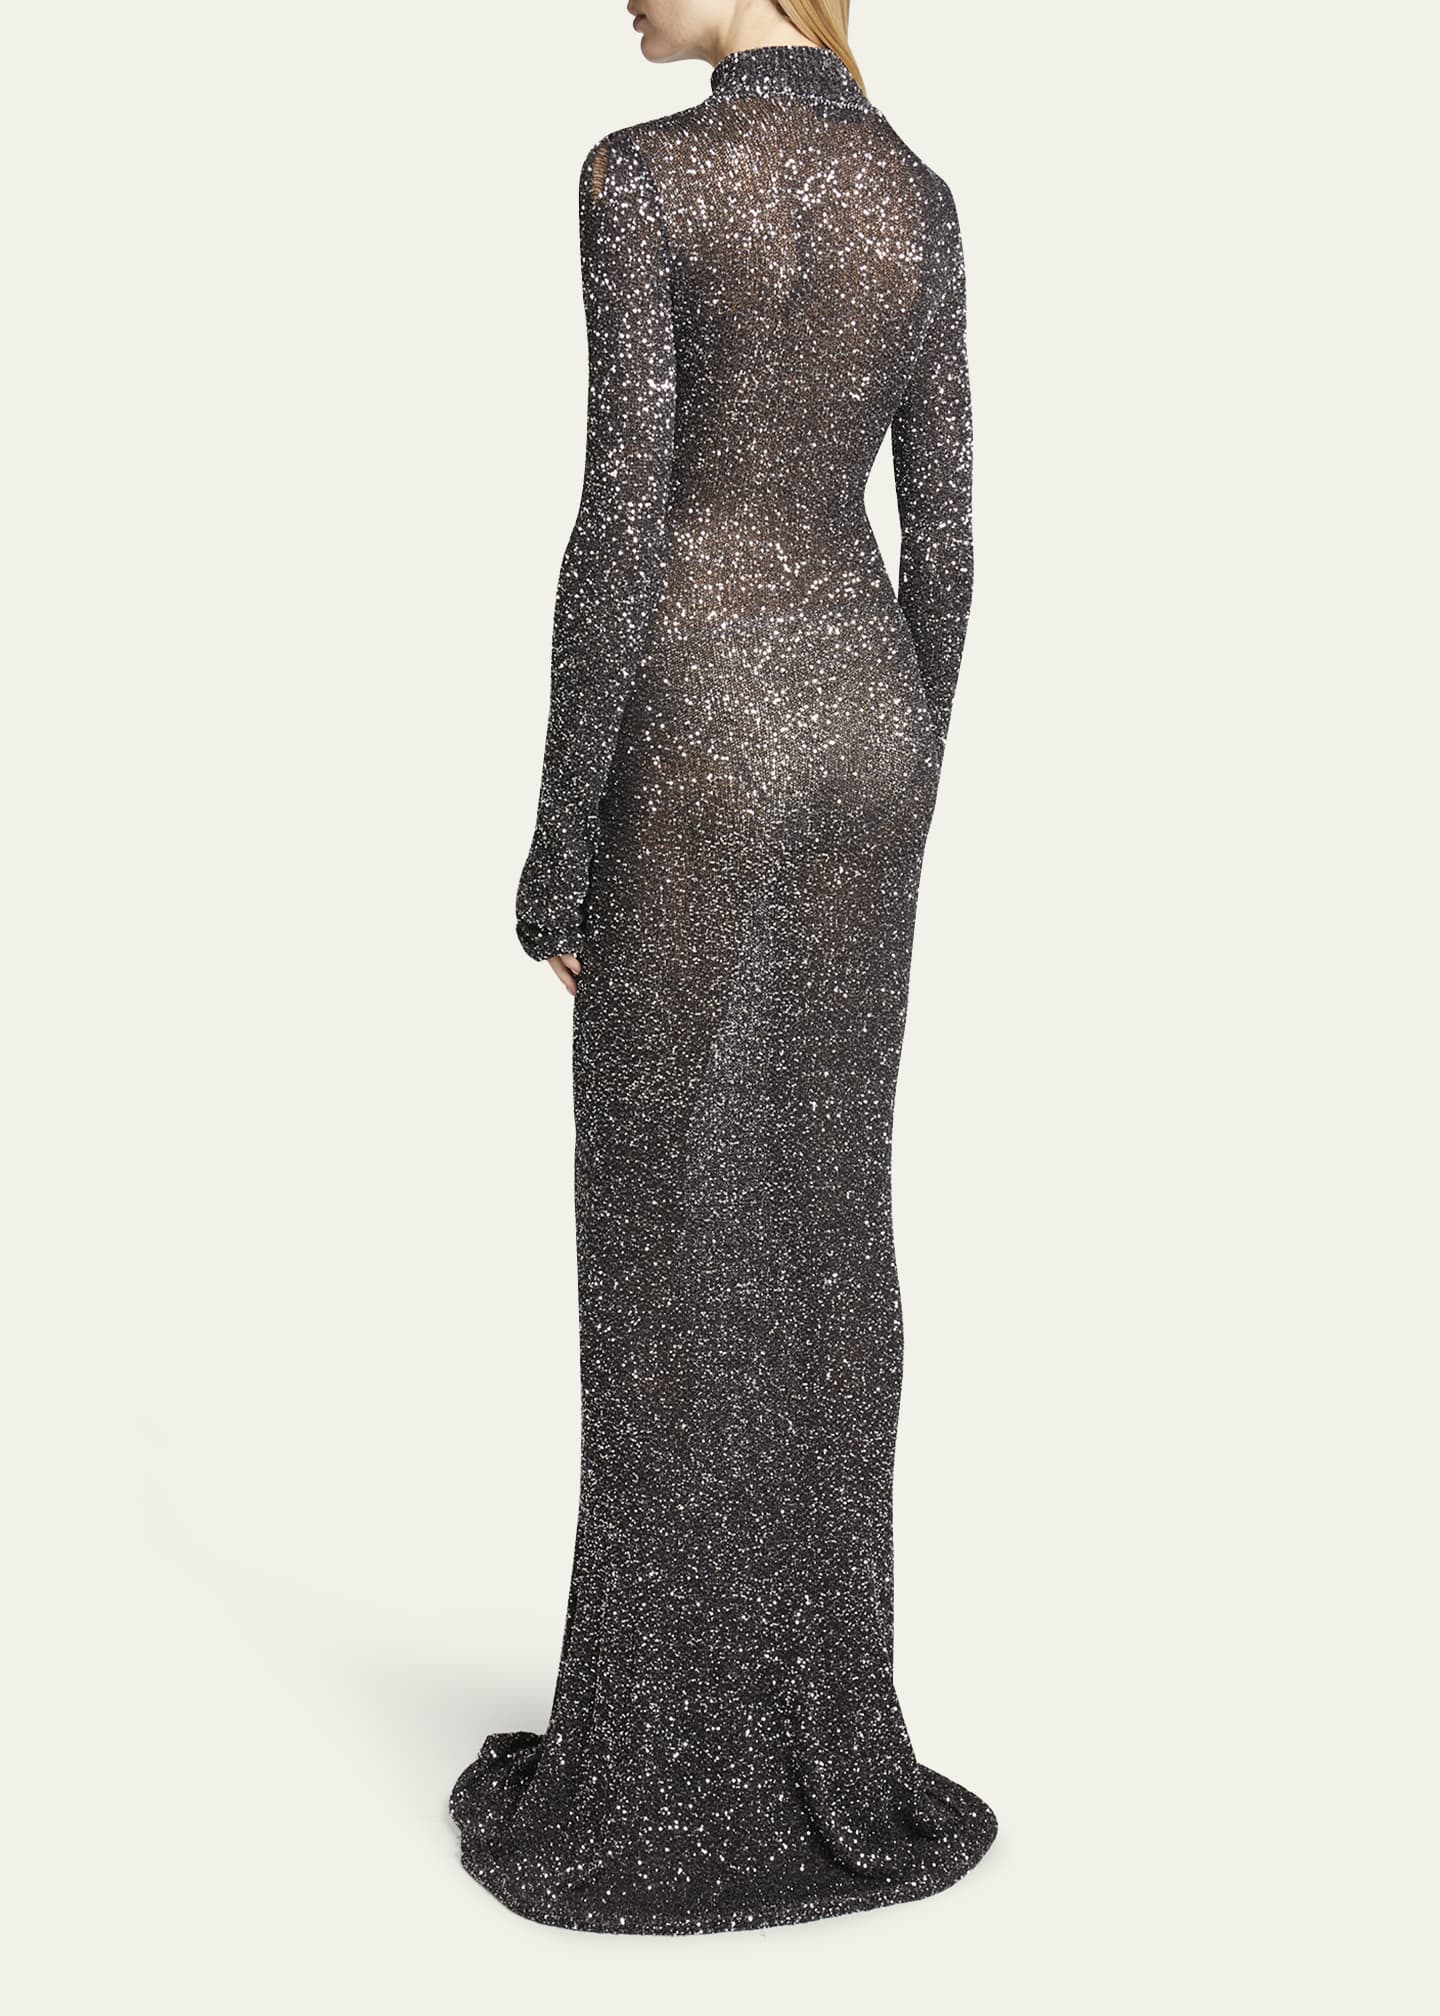 Balenciaga Sequin Knit Maxi Dress - Bergdorf Goodman